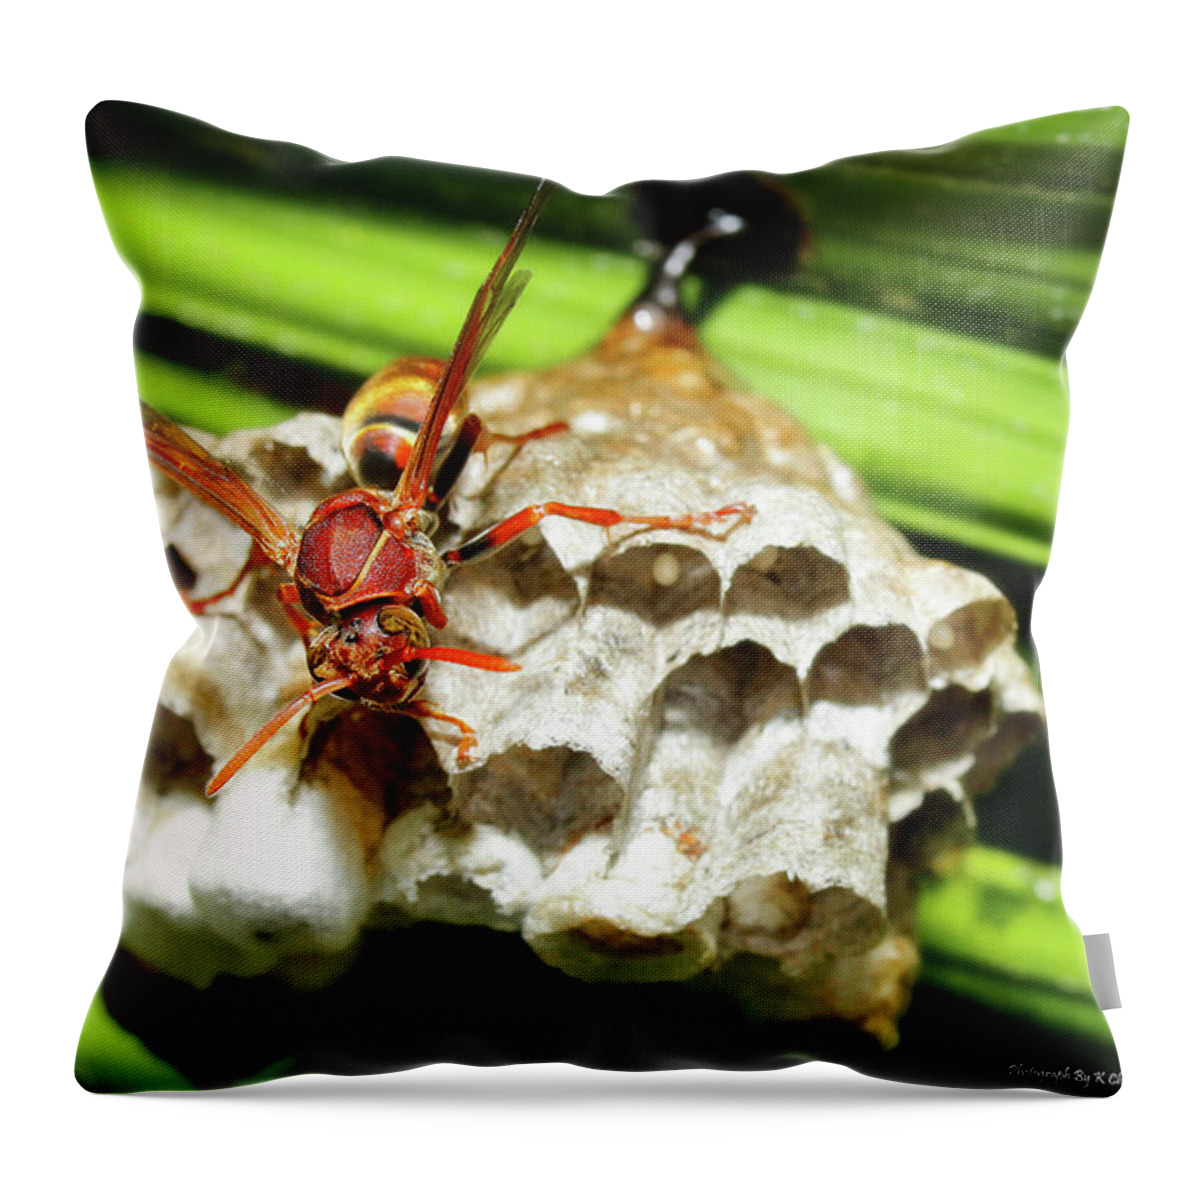 Australian Papper Wasp Throw Pillow featuring the photograph Australian Papper Wasp 772 by Kevin Chippindall